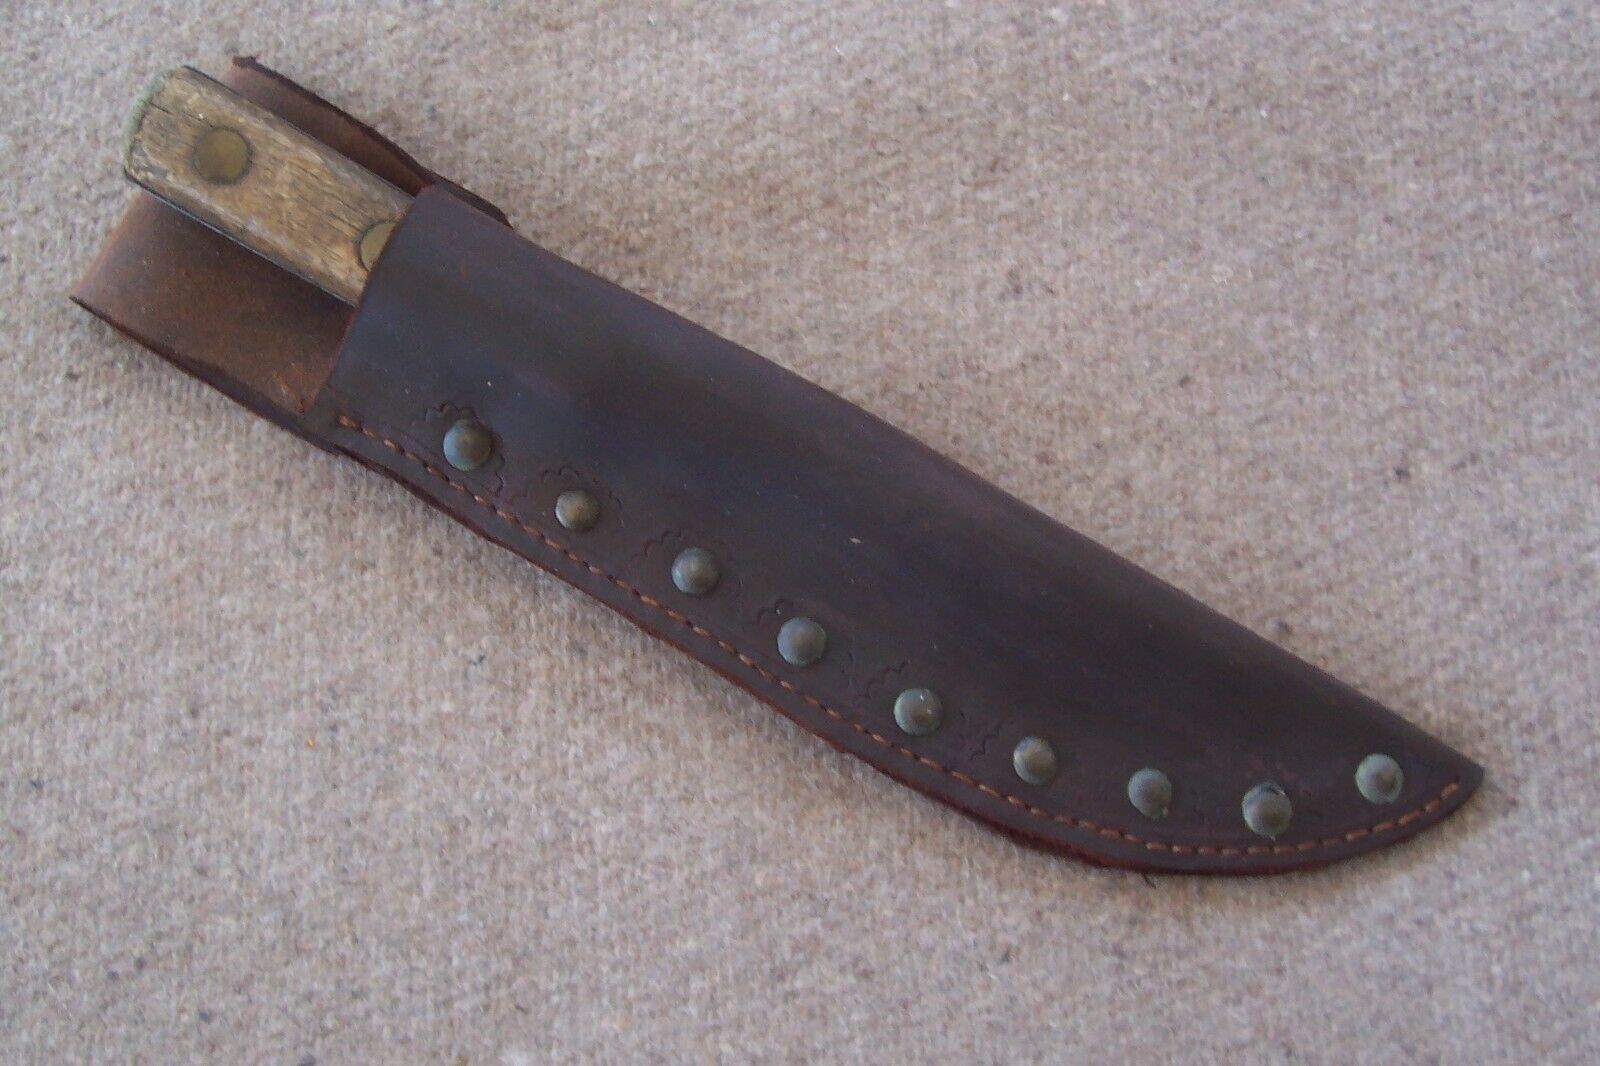 Old Cowboy Knife Vintage Hunting / Camping